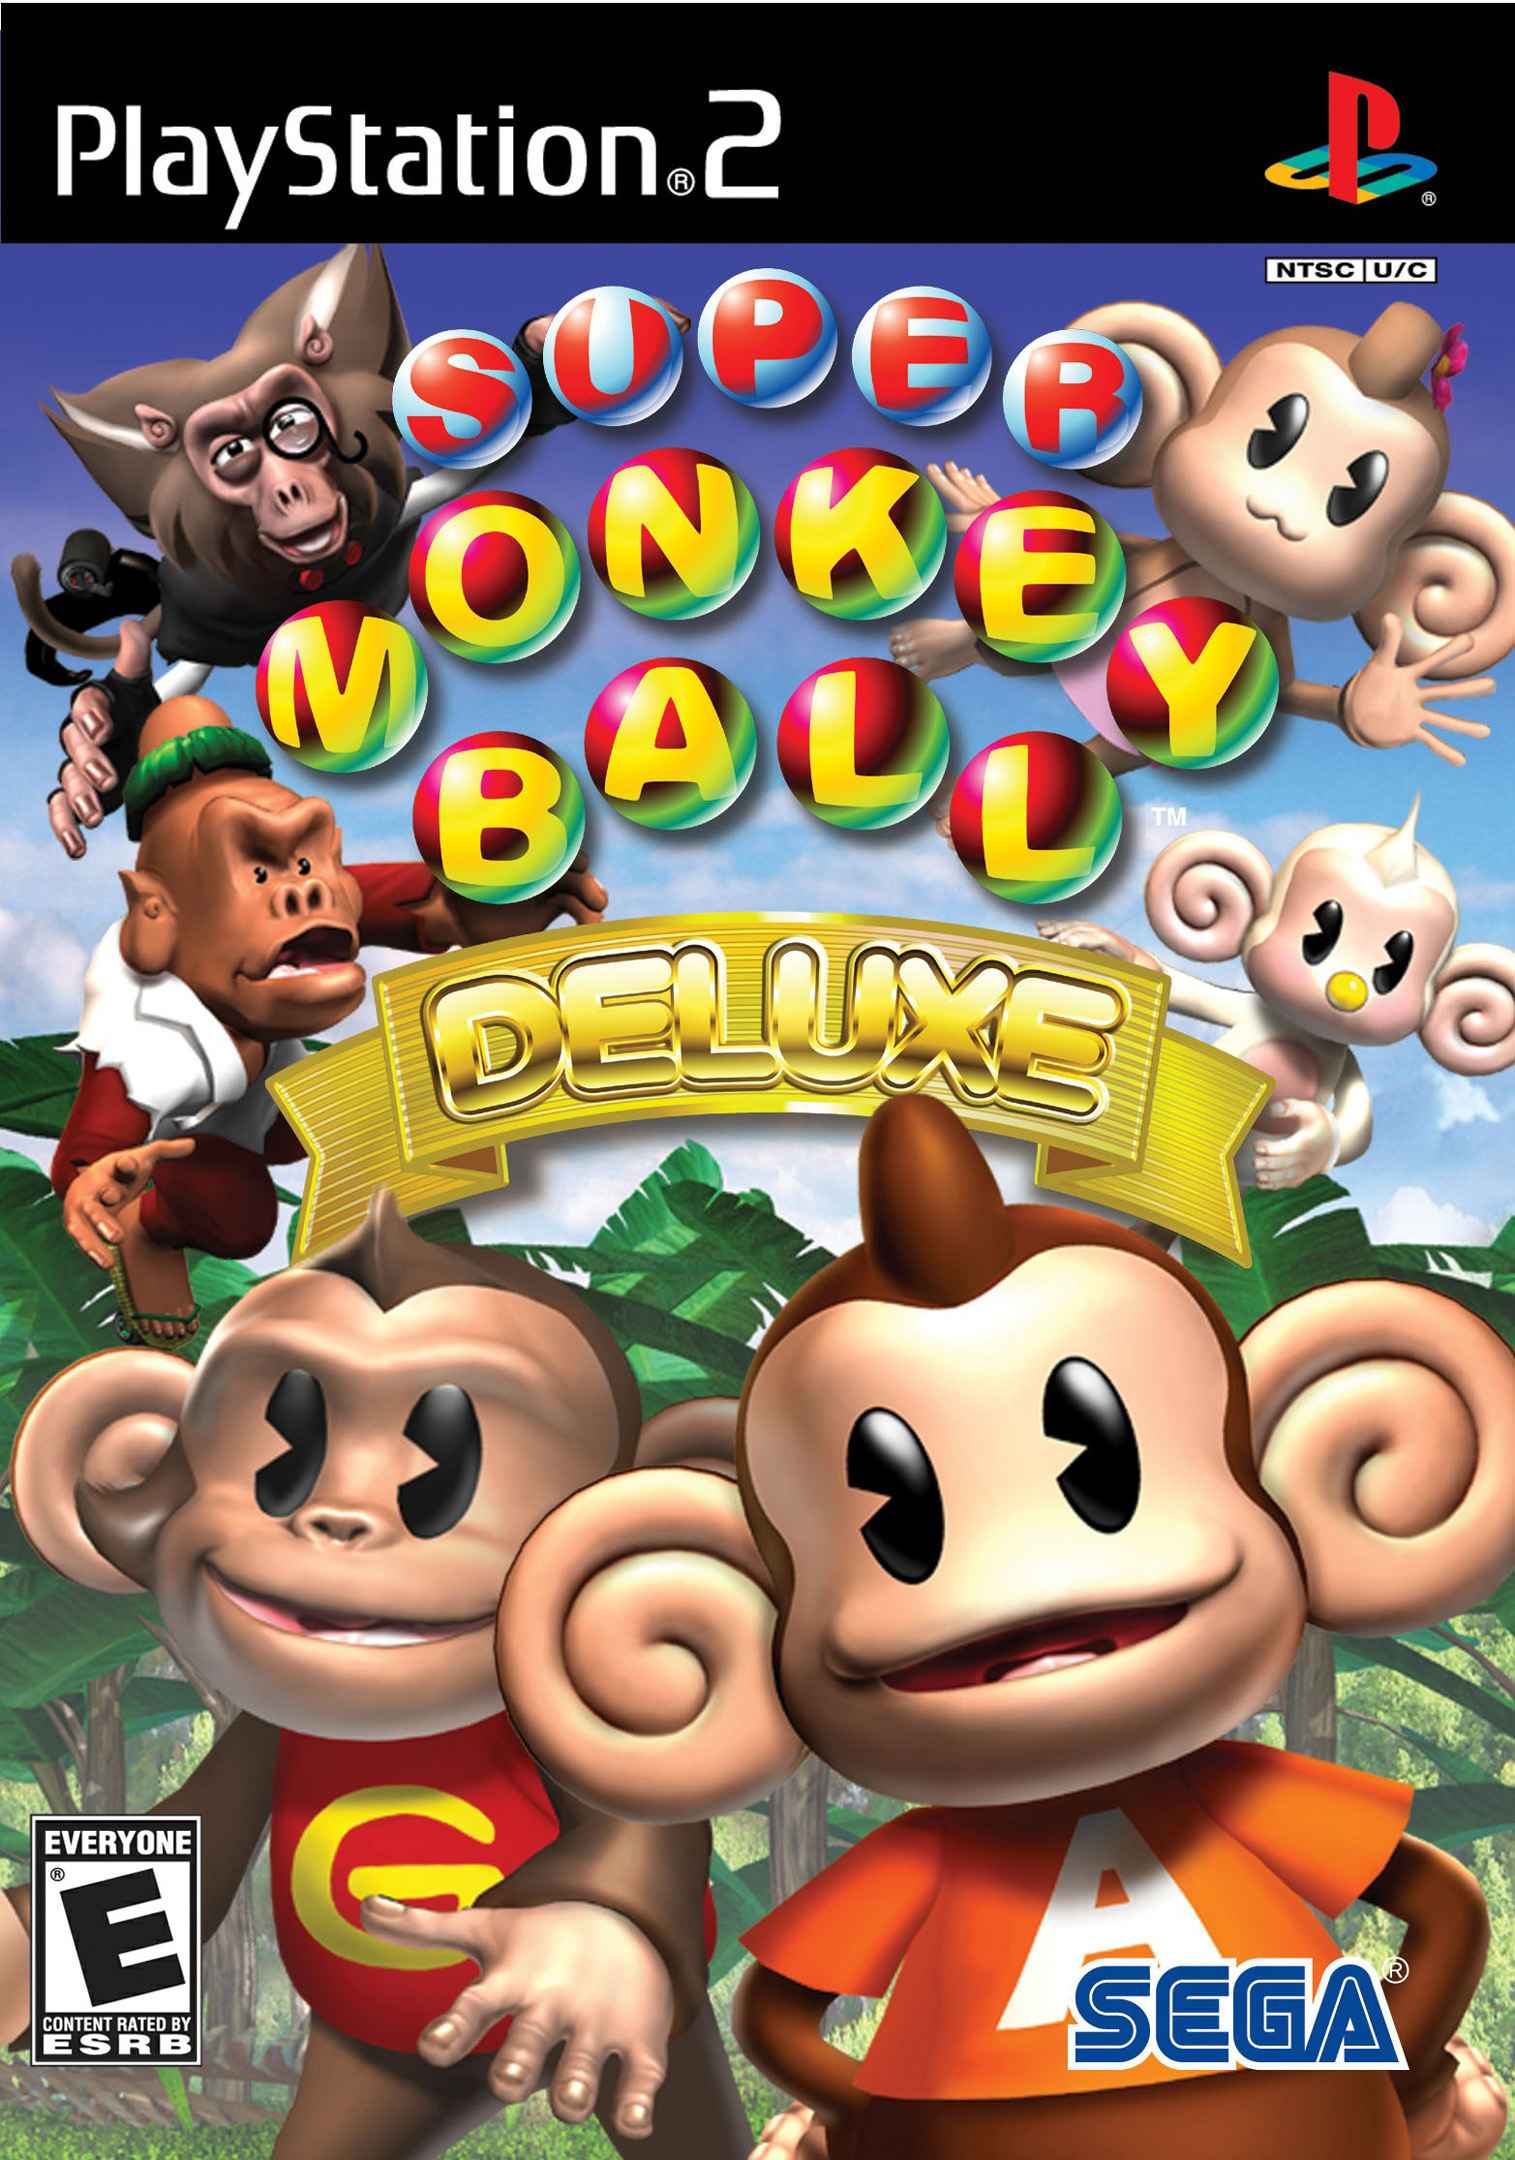 Super Monkey Ball Deluxe | Super Monkey Ball Wiki | Fandom powered by Wikia